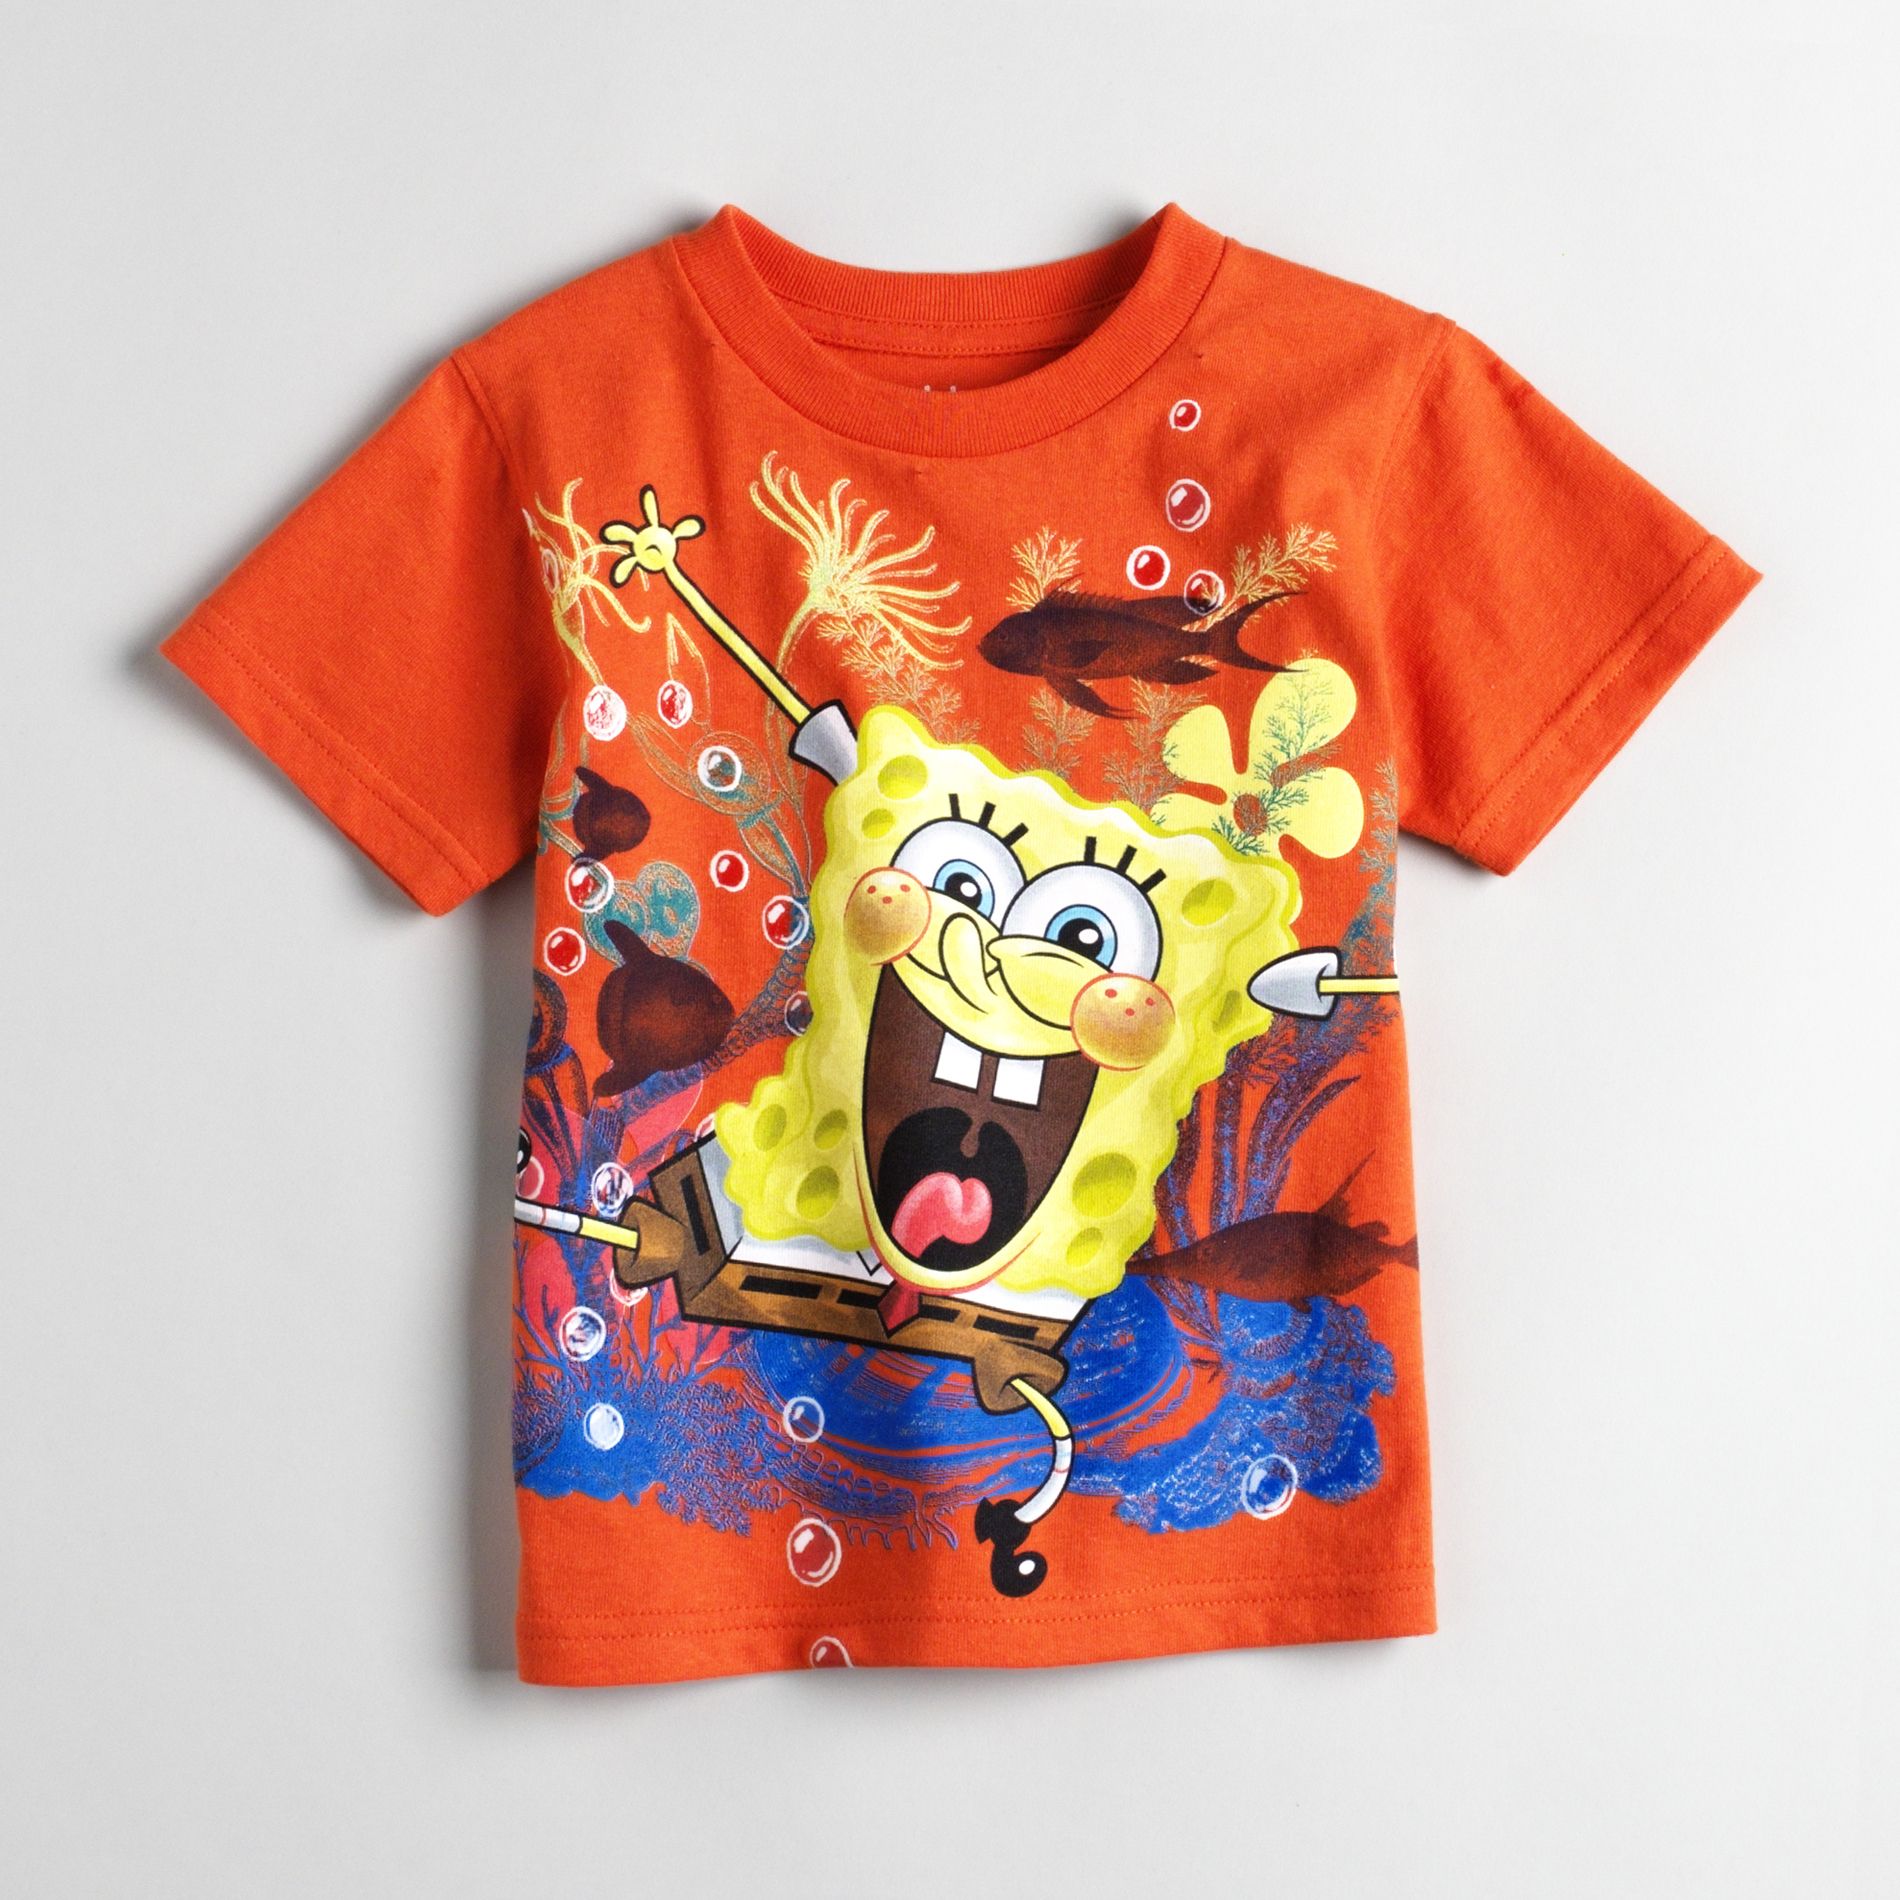 Nickelodeon Toddler Boy's SpongeBob Under the Sea Tee